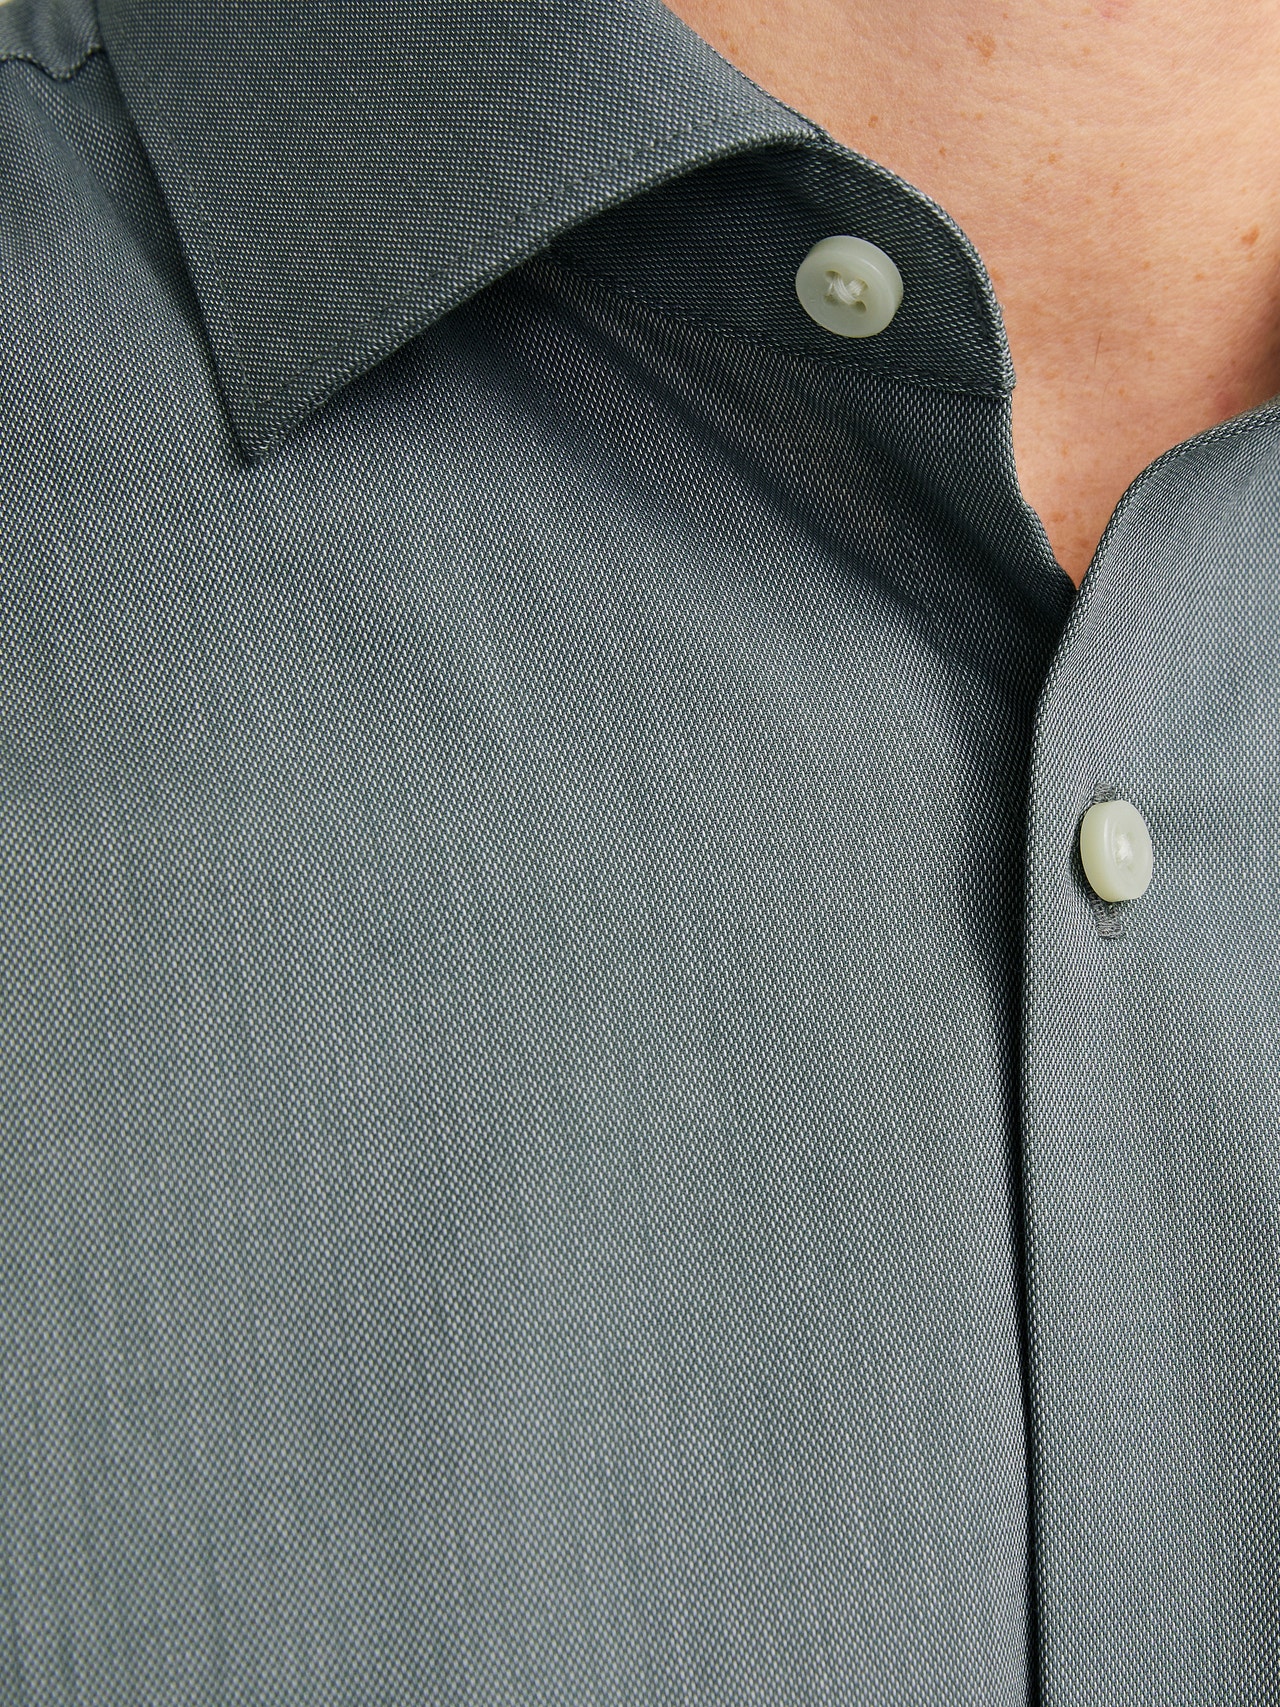 Jack & Jones Slim Fit Overhemd -Balsam Green - 12227385